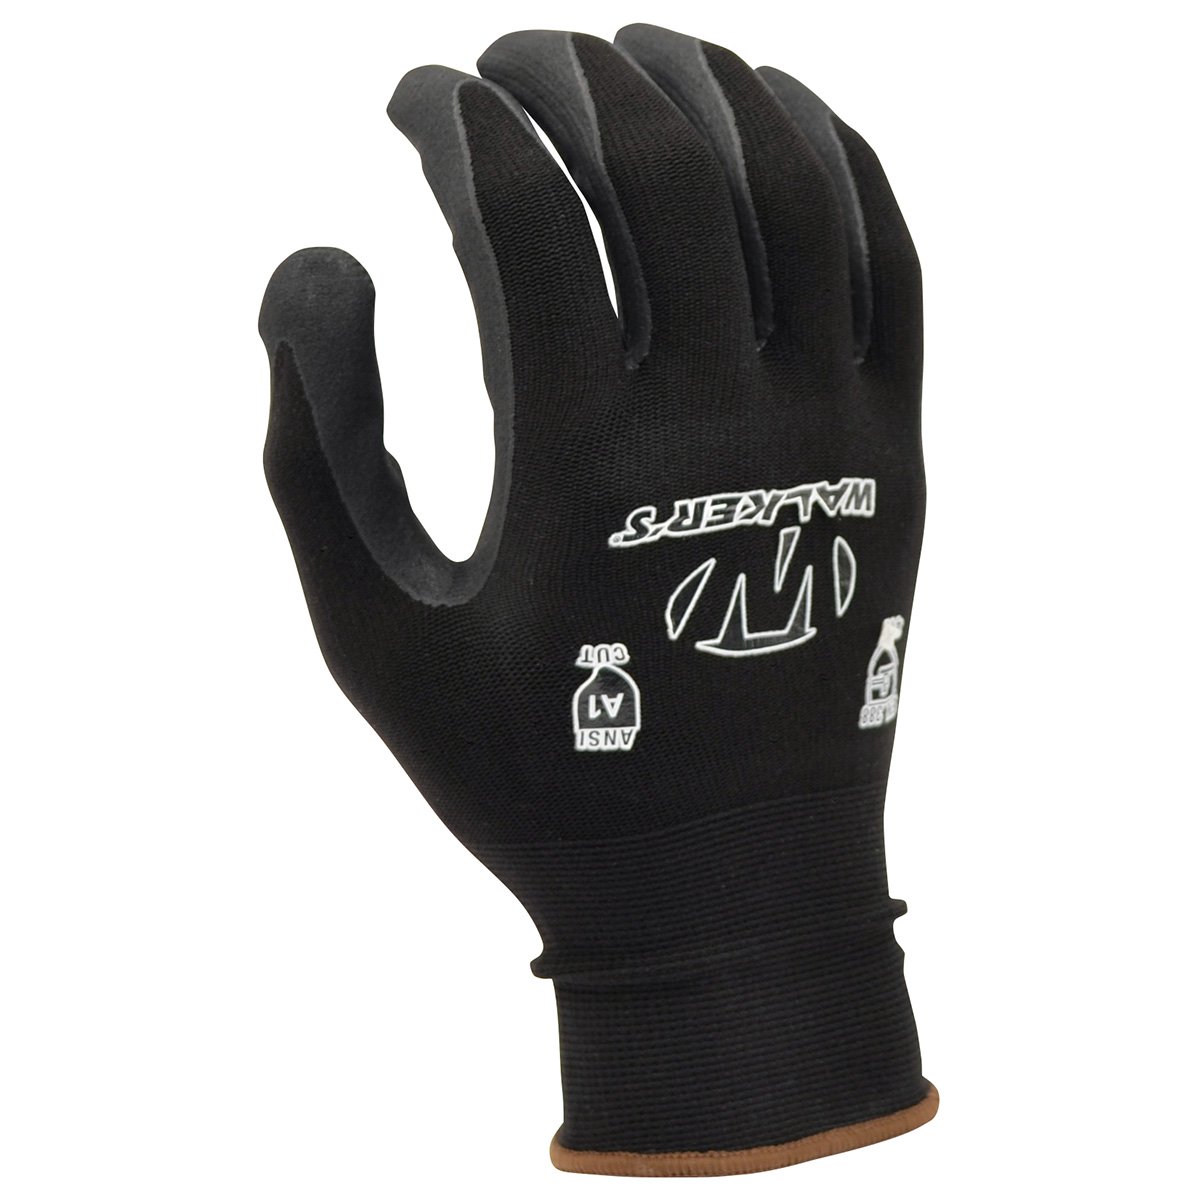 https://www.walkersgameear.com/wp-content/uploads/sites/4/2021/06/walkers-coated-nylon-xtra-grip-gloves-1.jpg